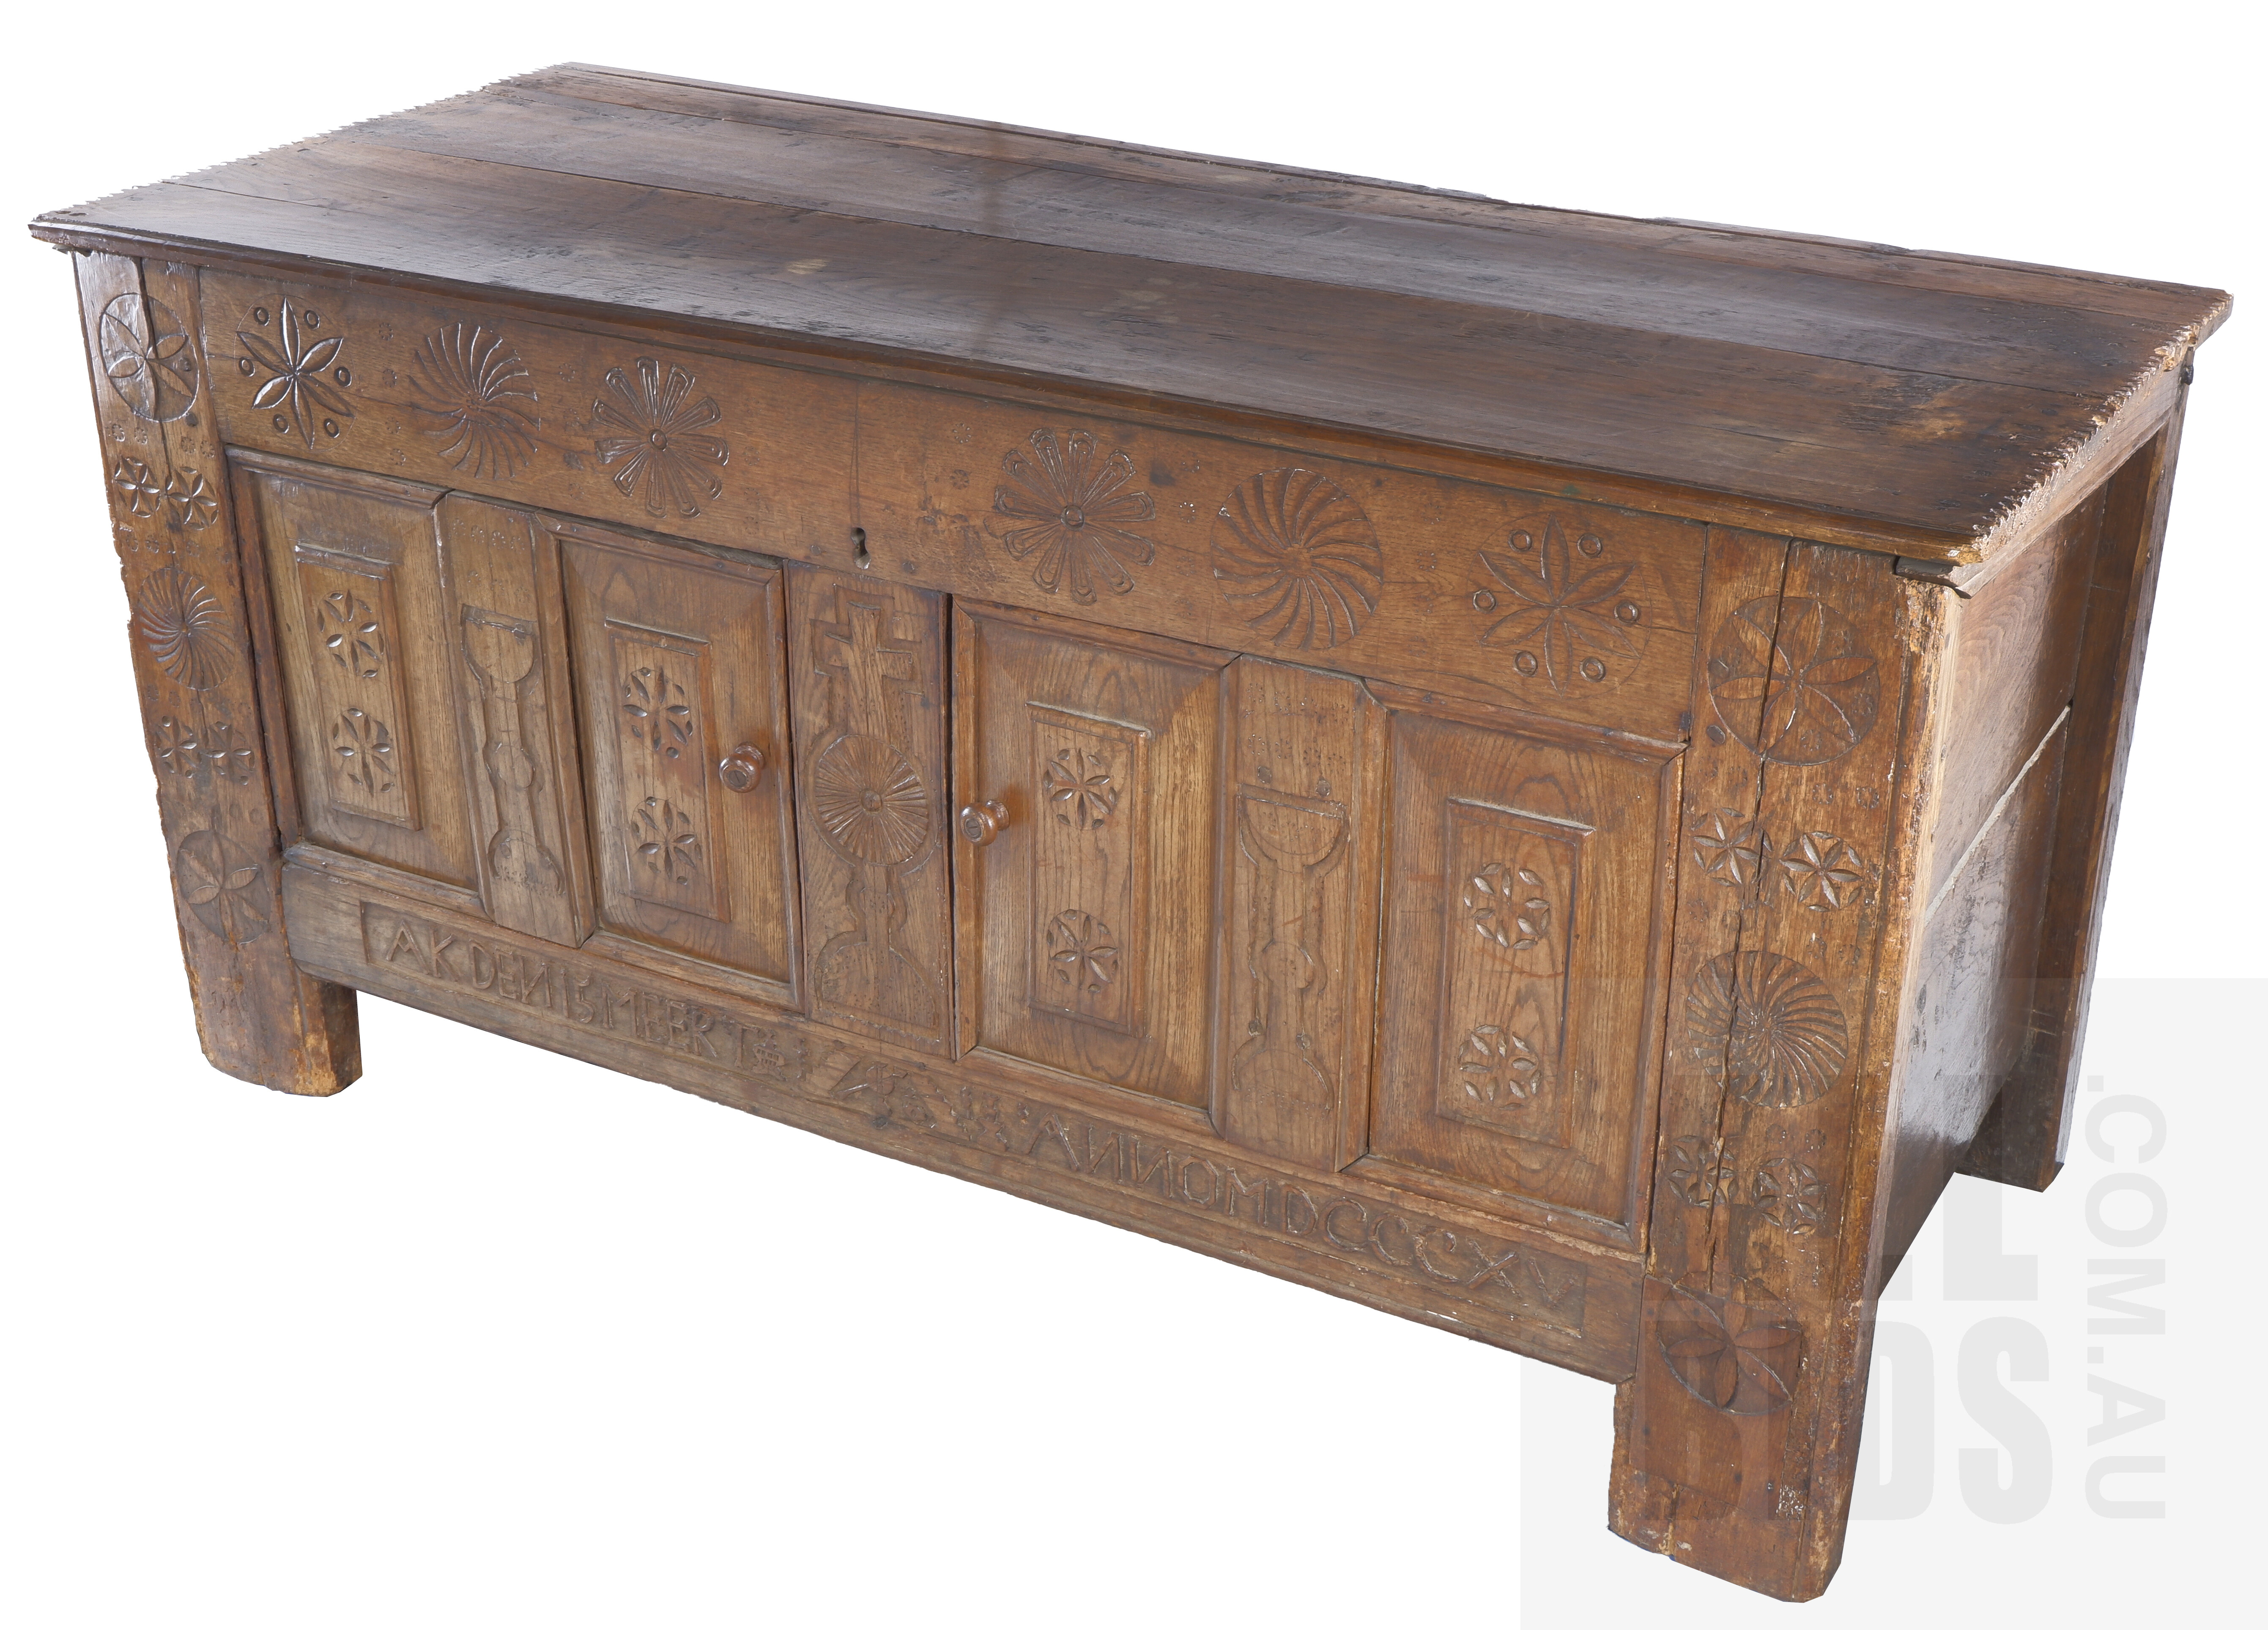 'A Dutch Oak and Ebony Veneered Cabinet (Kussenkast) 17th/18th Century'